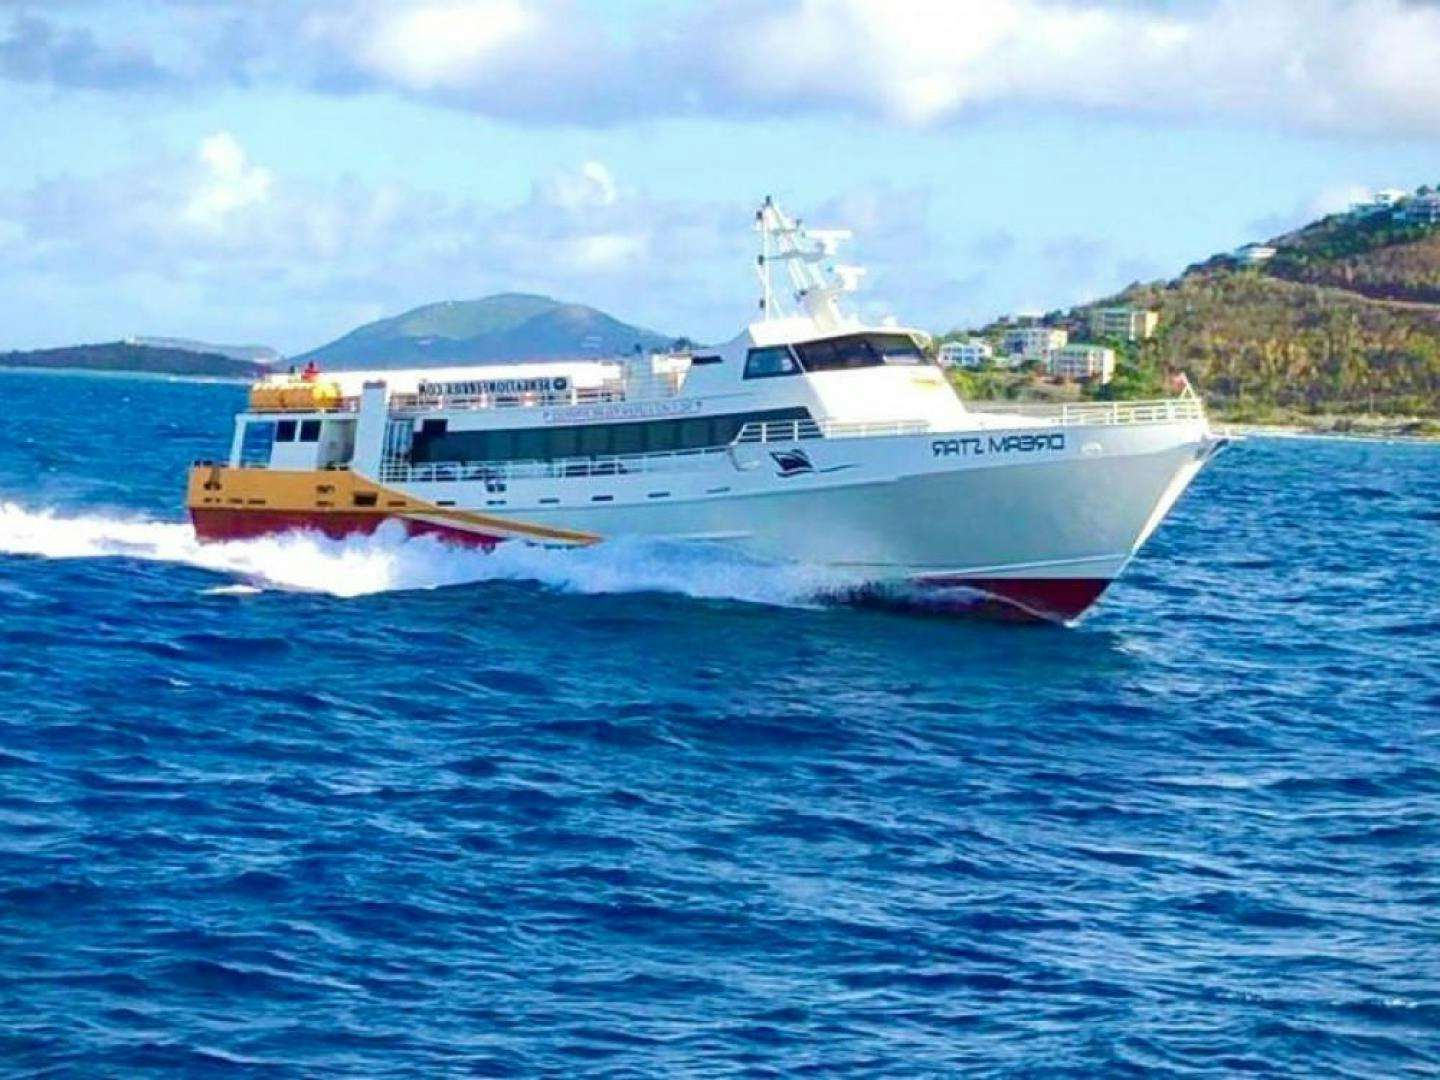 Dream star
Yacht for Sale